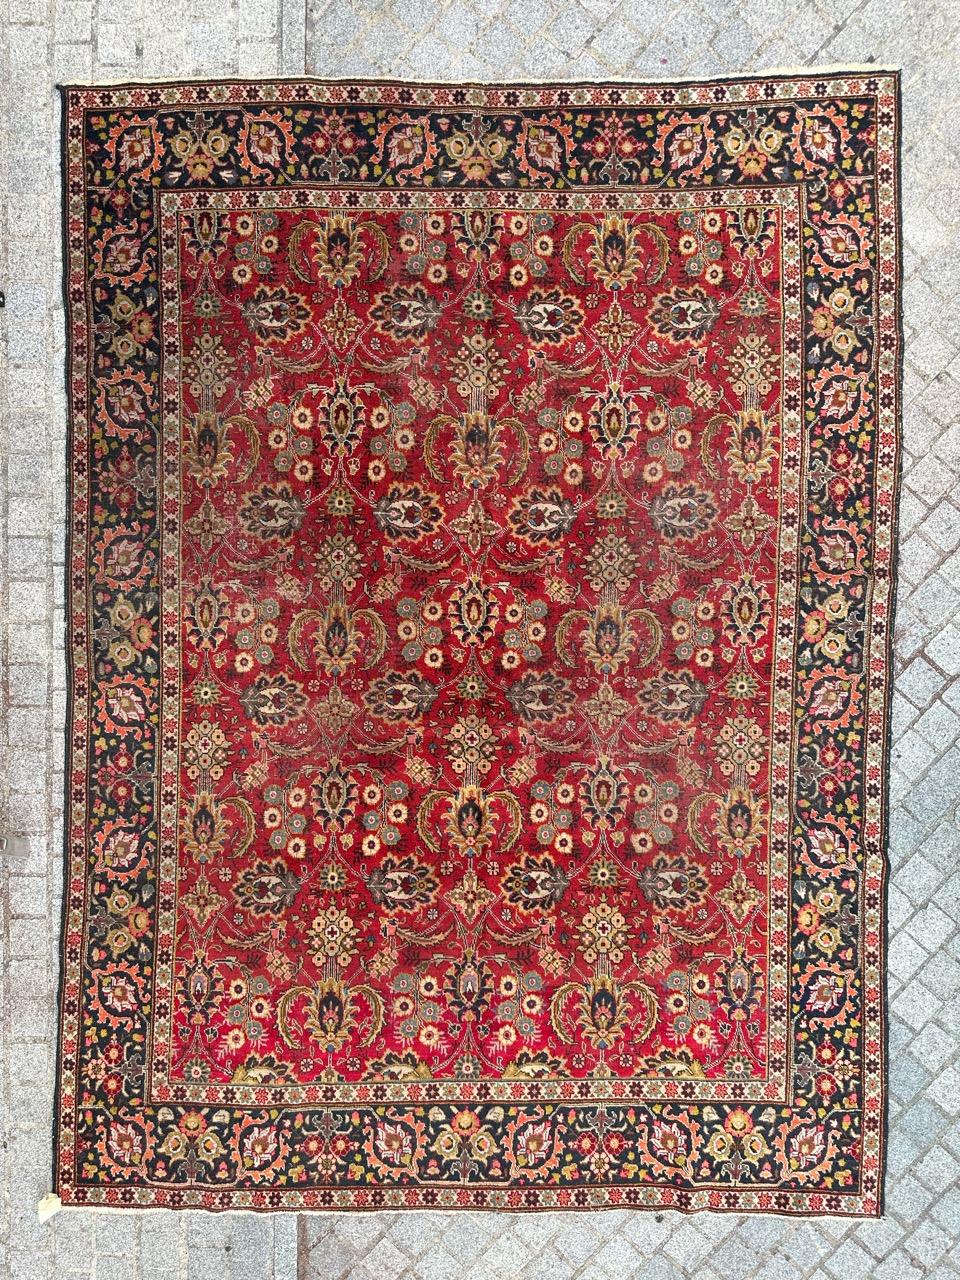 Bobyrug’s Nice early 20th century tabriz rug For Sale 7